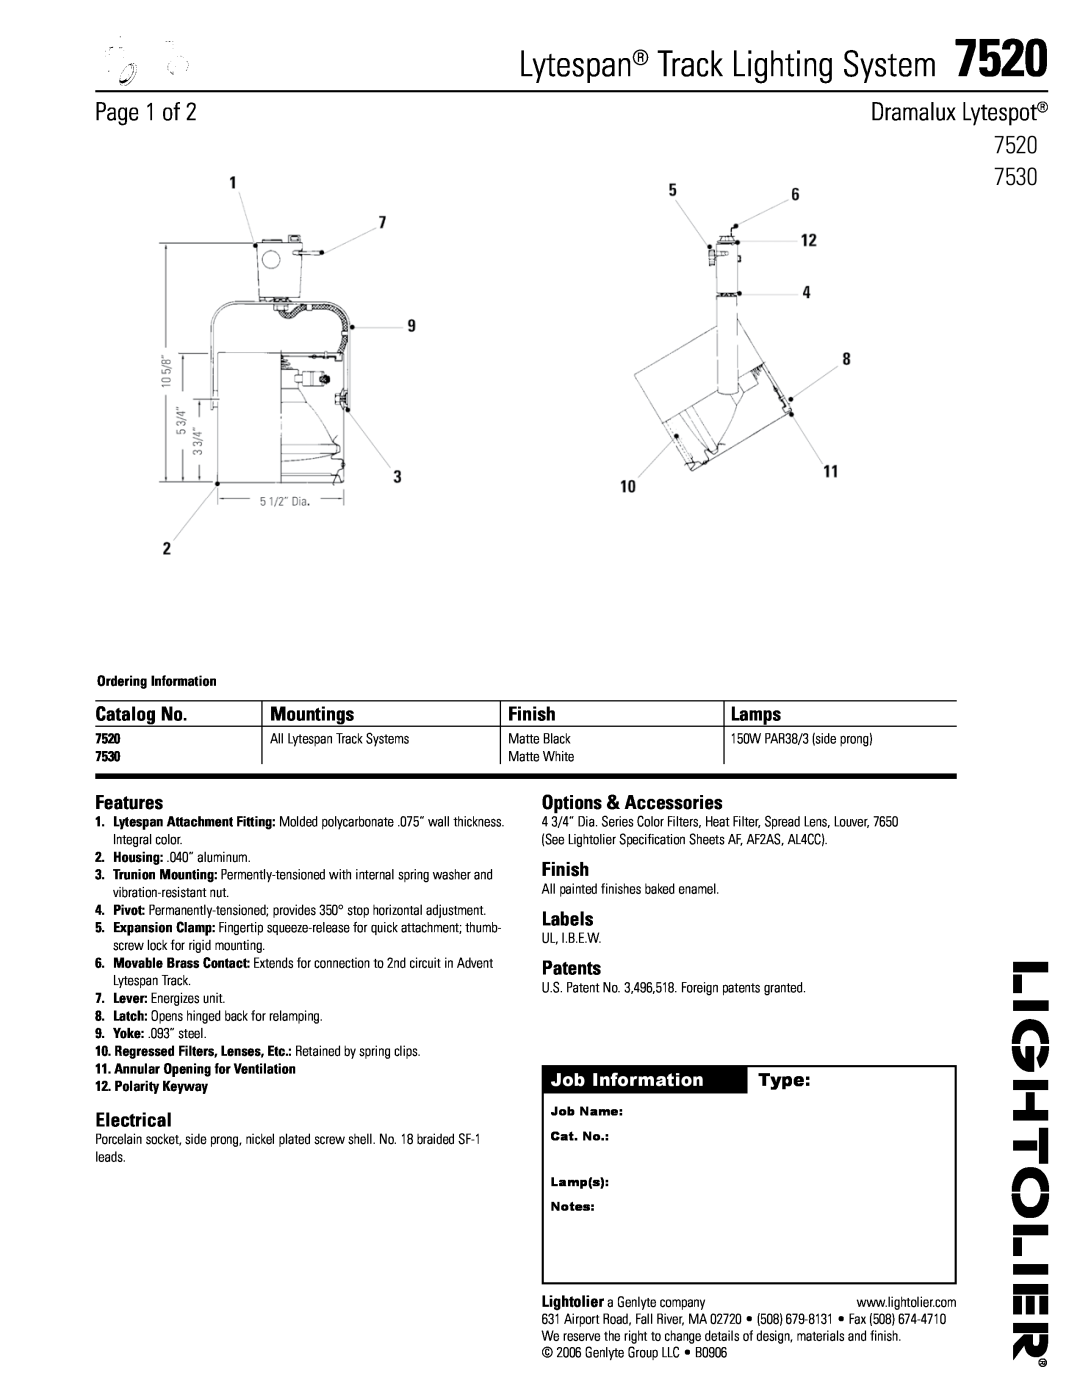 Lightolier 7520 specifications Page 1 of, Dramalux Lytespot, 7530, Lytespan Track Lighting System, Catalog No, Mountings 